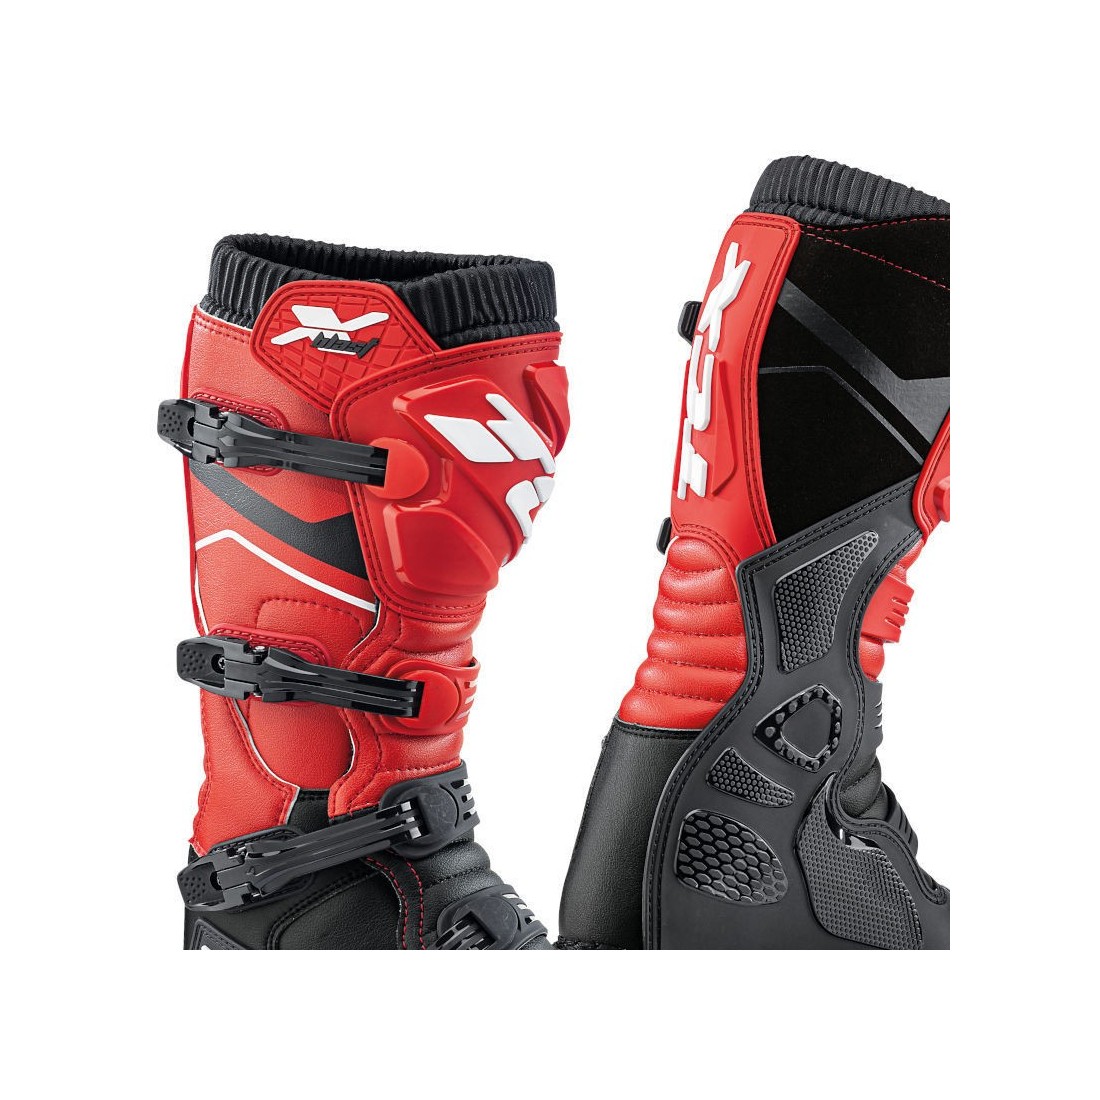 TCX X-Blast black red motocross boots